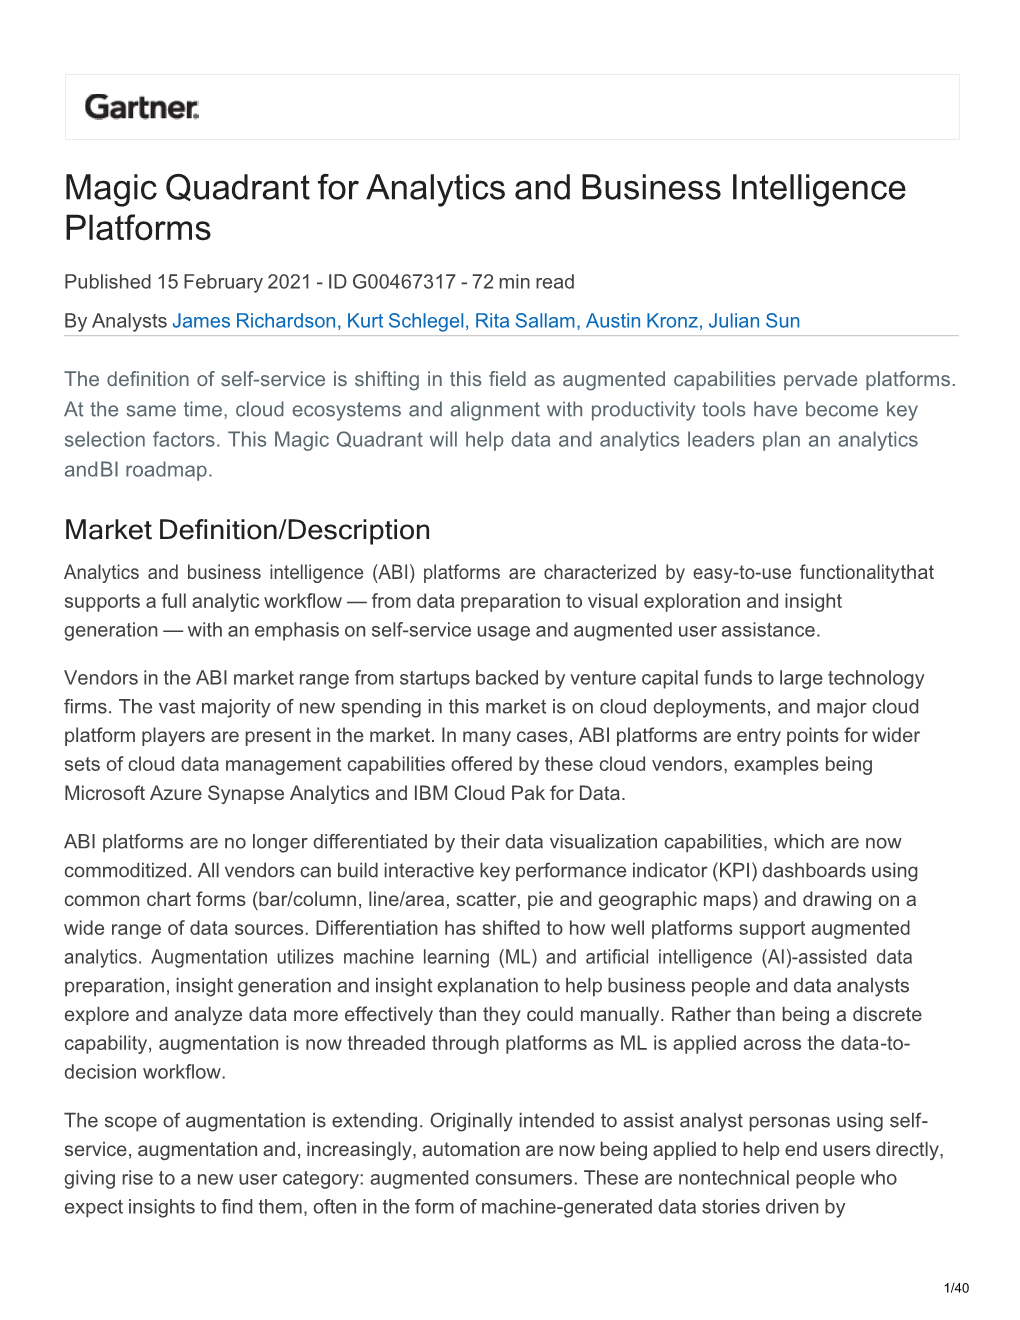 Magic Quadrant for Analytics and Business Intelligence Platforms